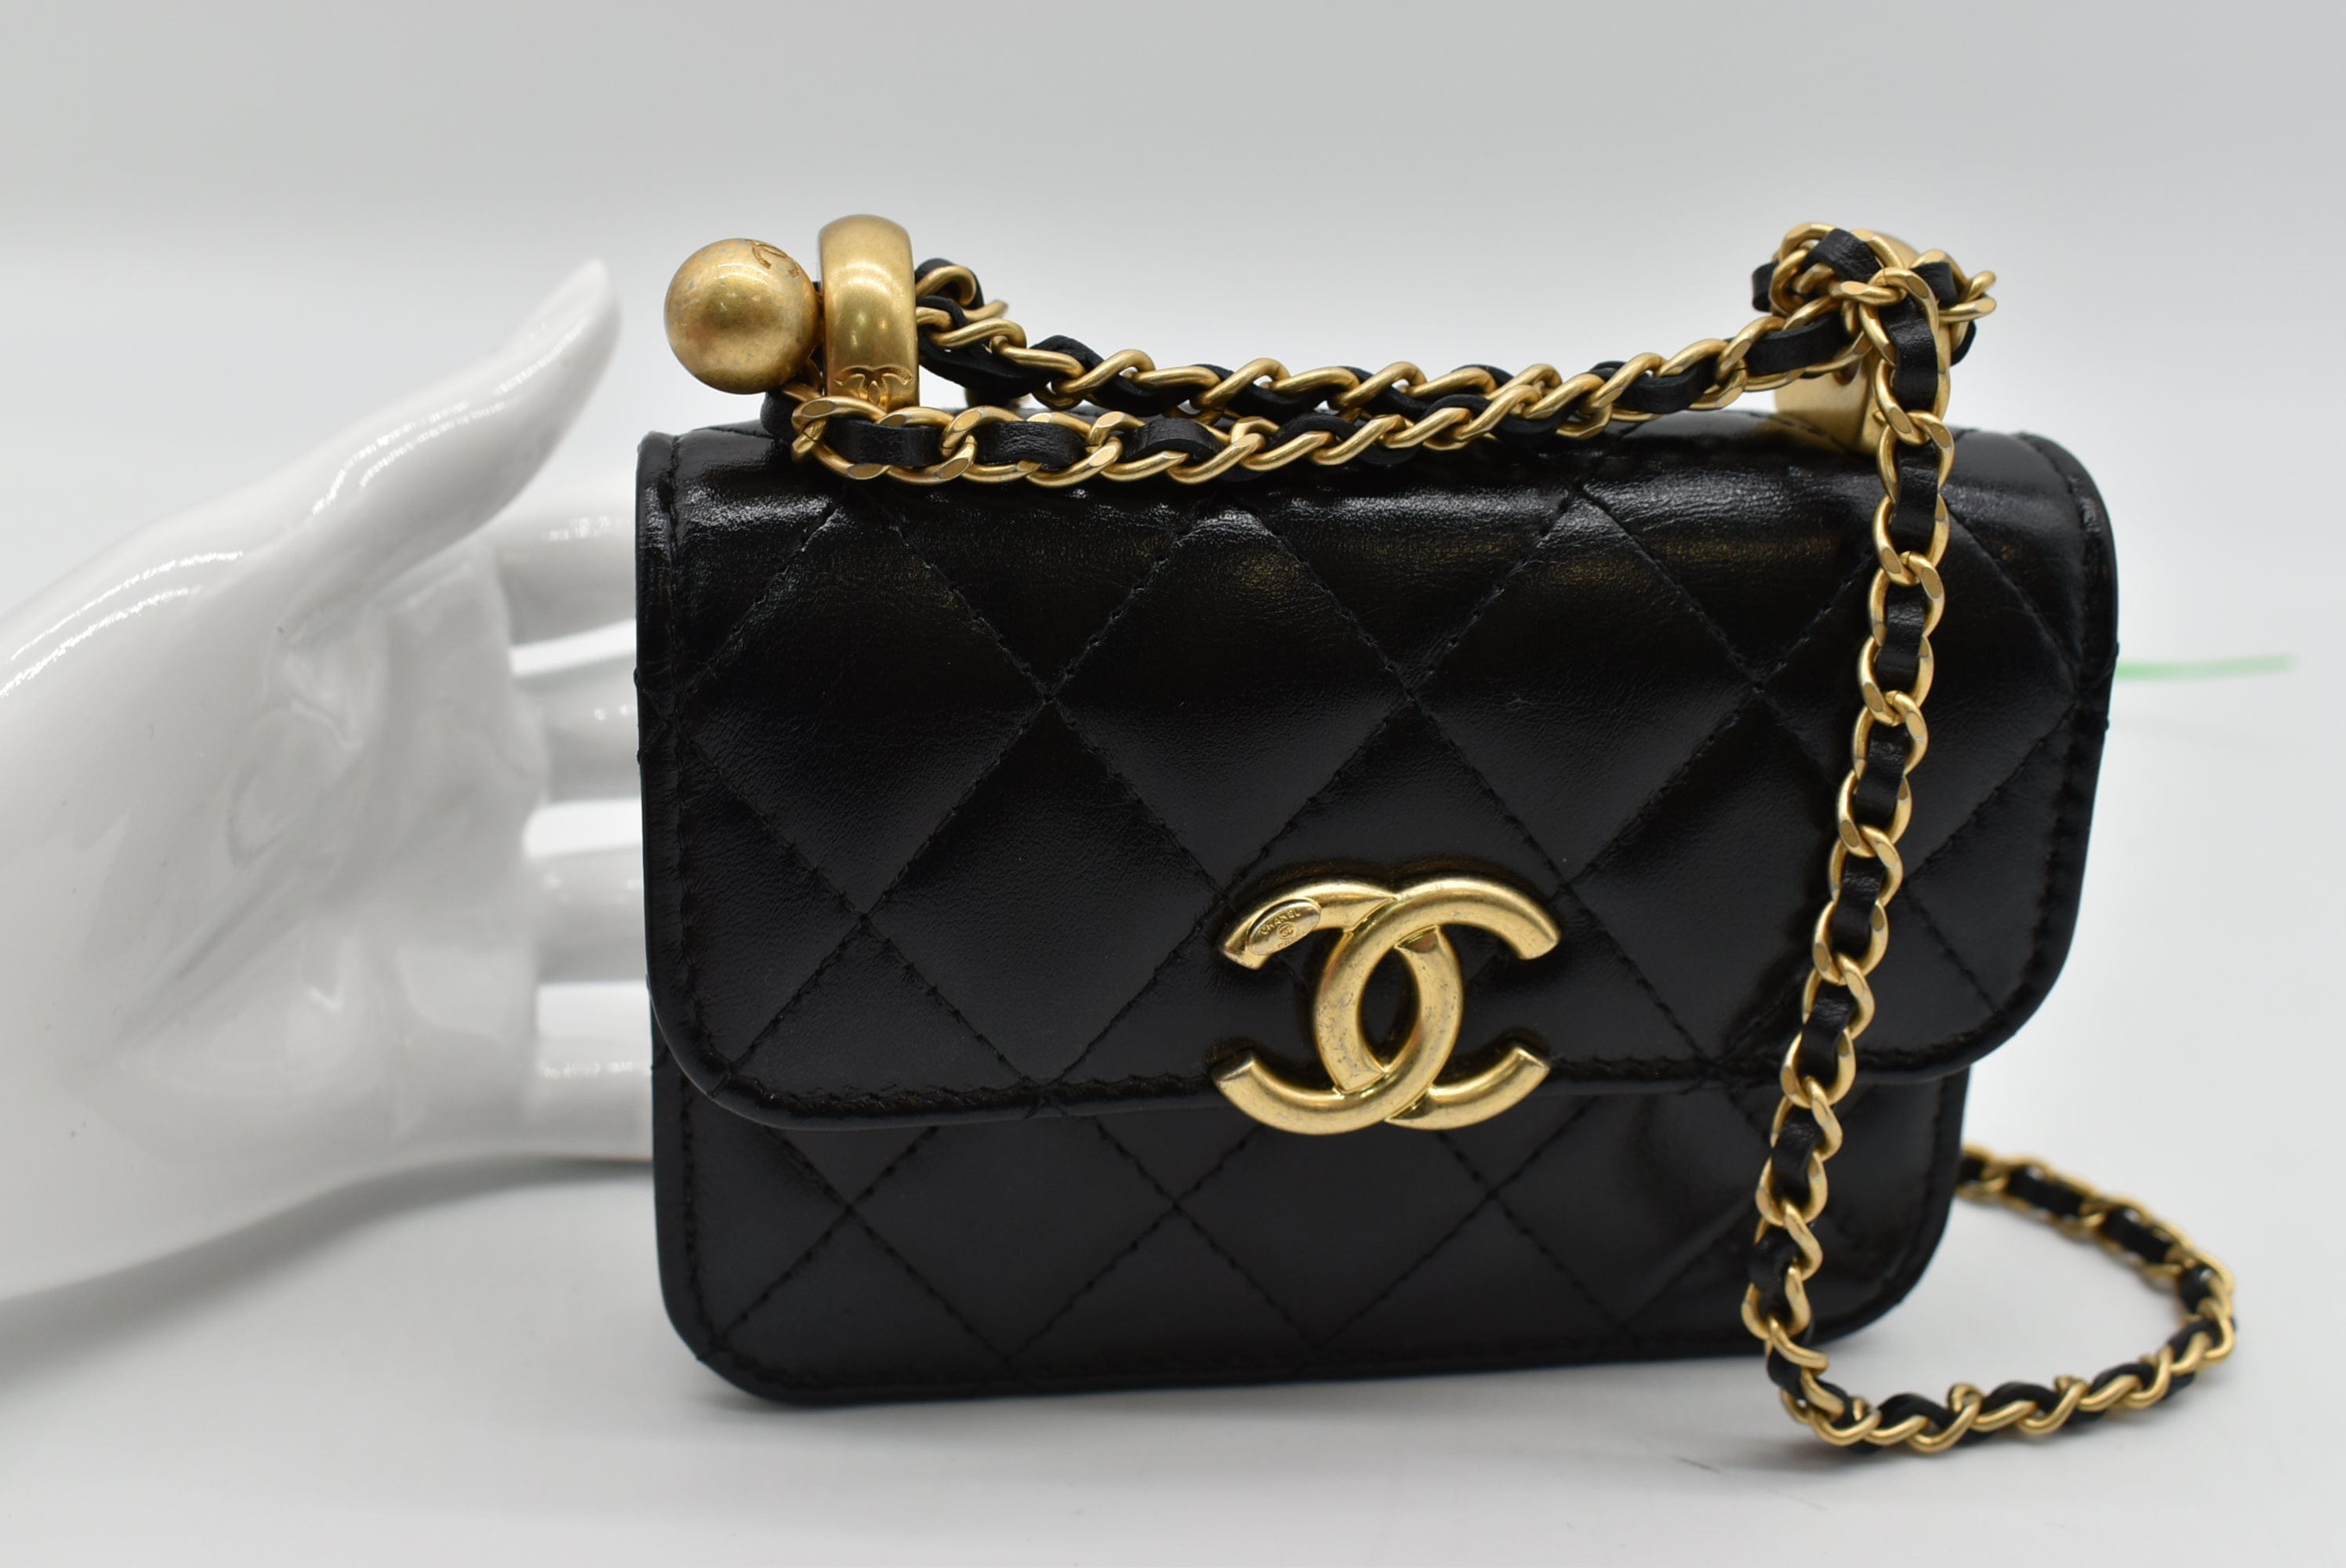 Chanel coin purse, Bags, Chanel bag